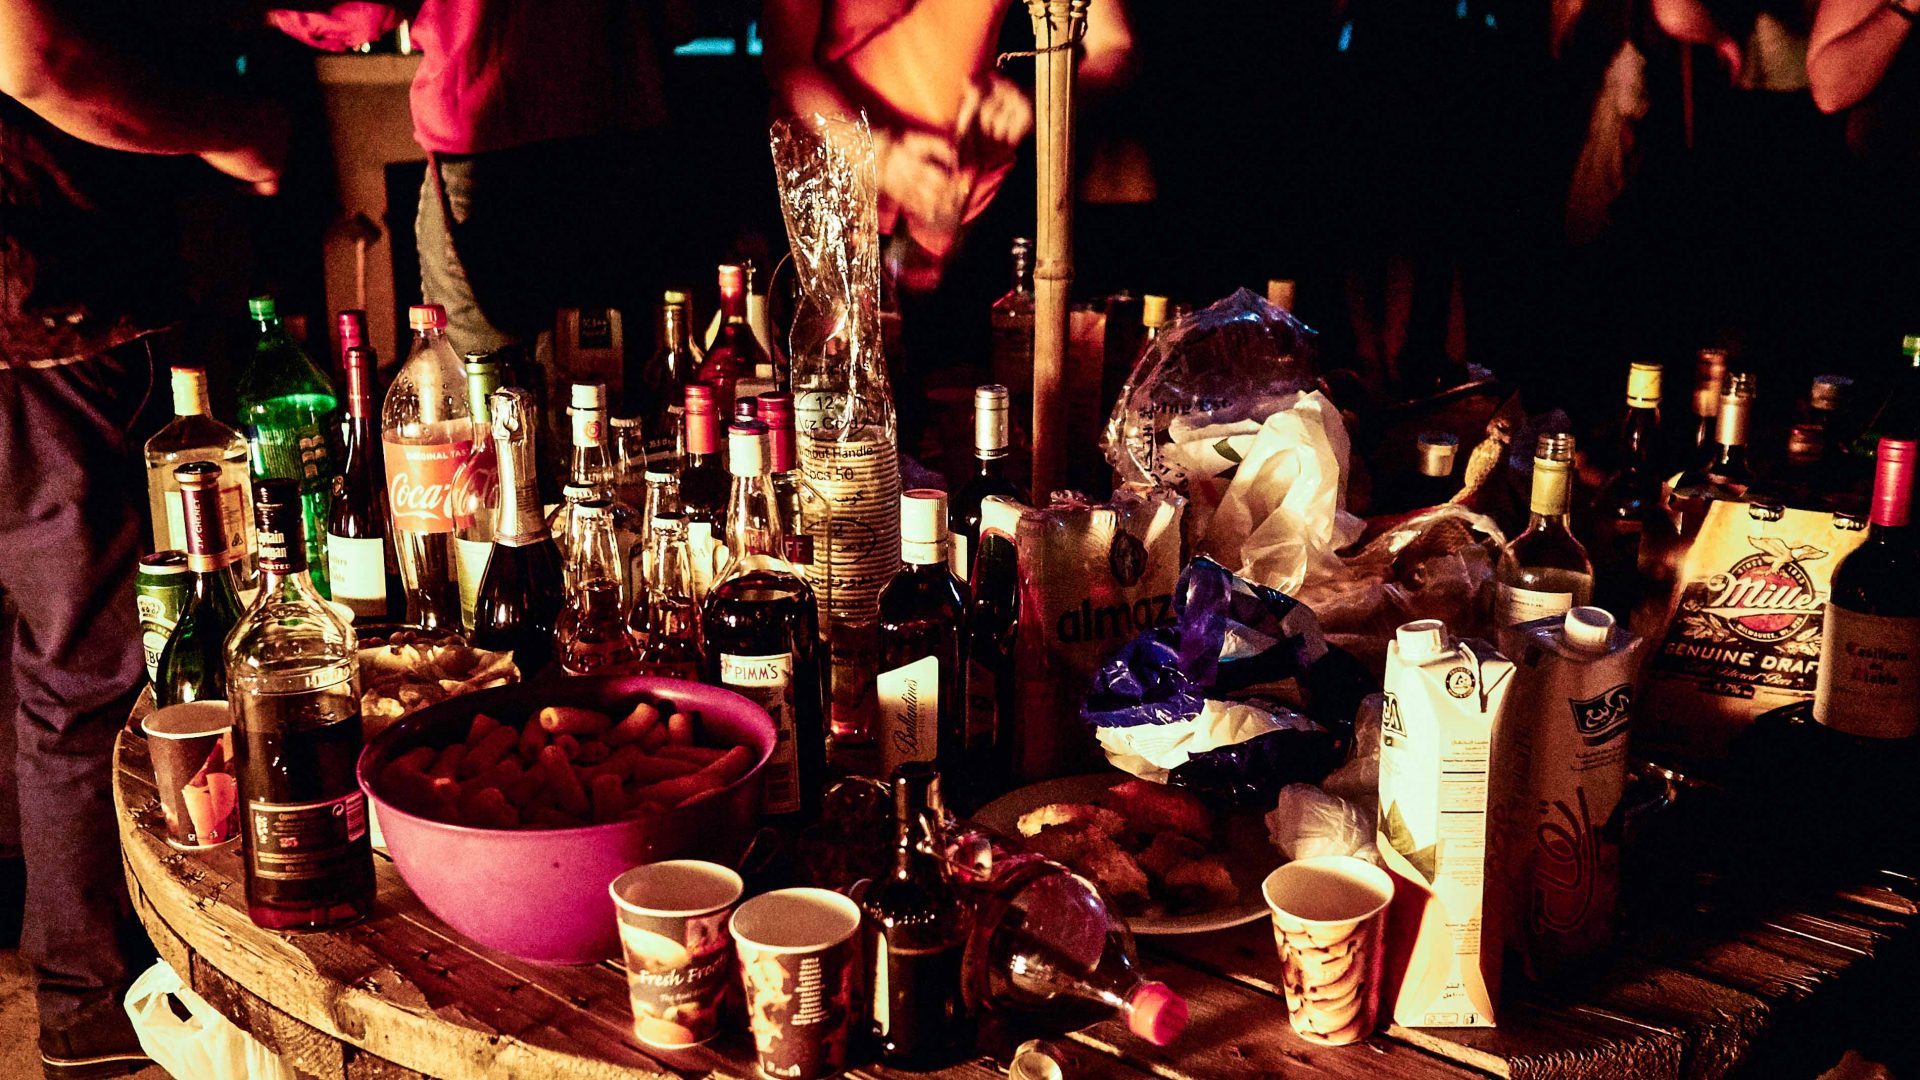 Bottles litter a table at an event in Erbil, Iraq.